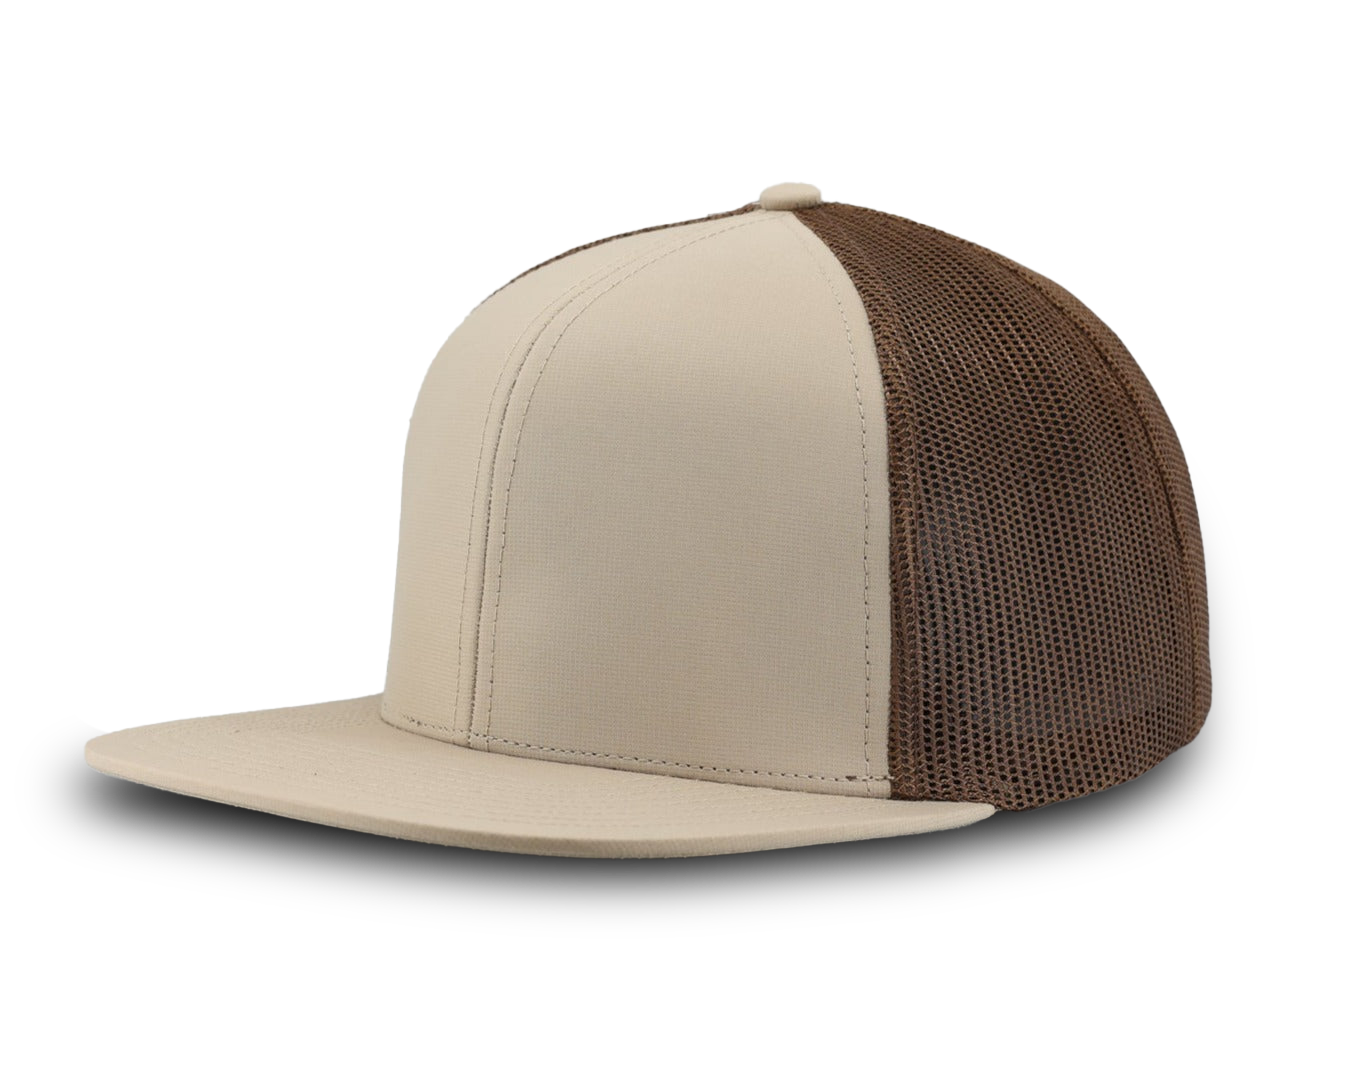 GENERAL-Custom hat-Flatbill-Snapback-khaki-brown- Zapped Headwear